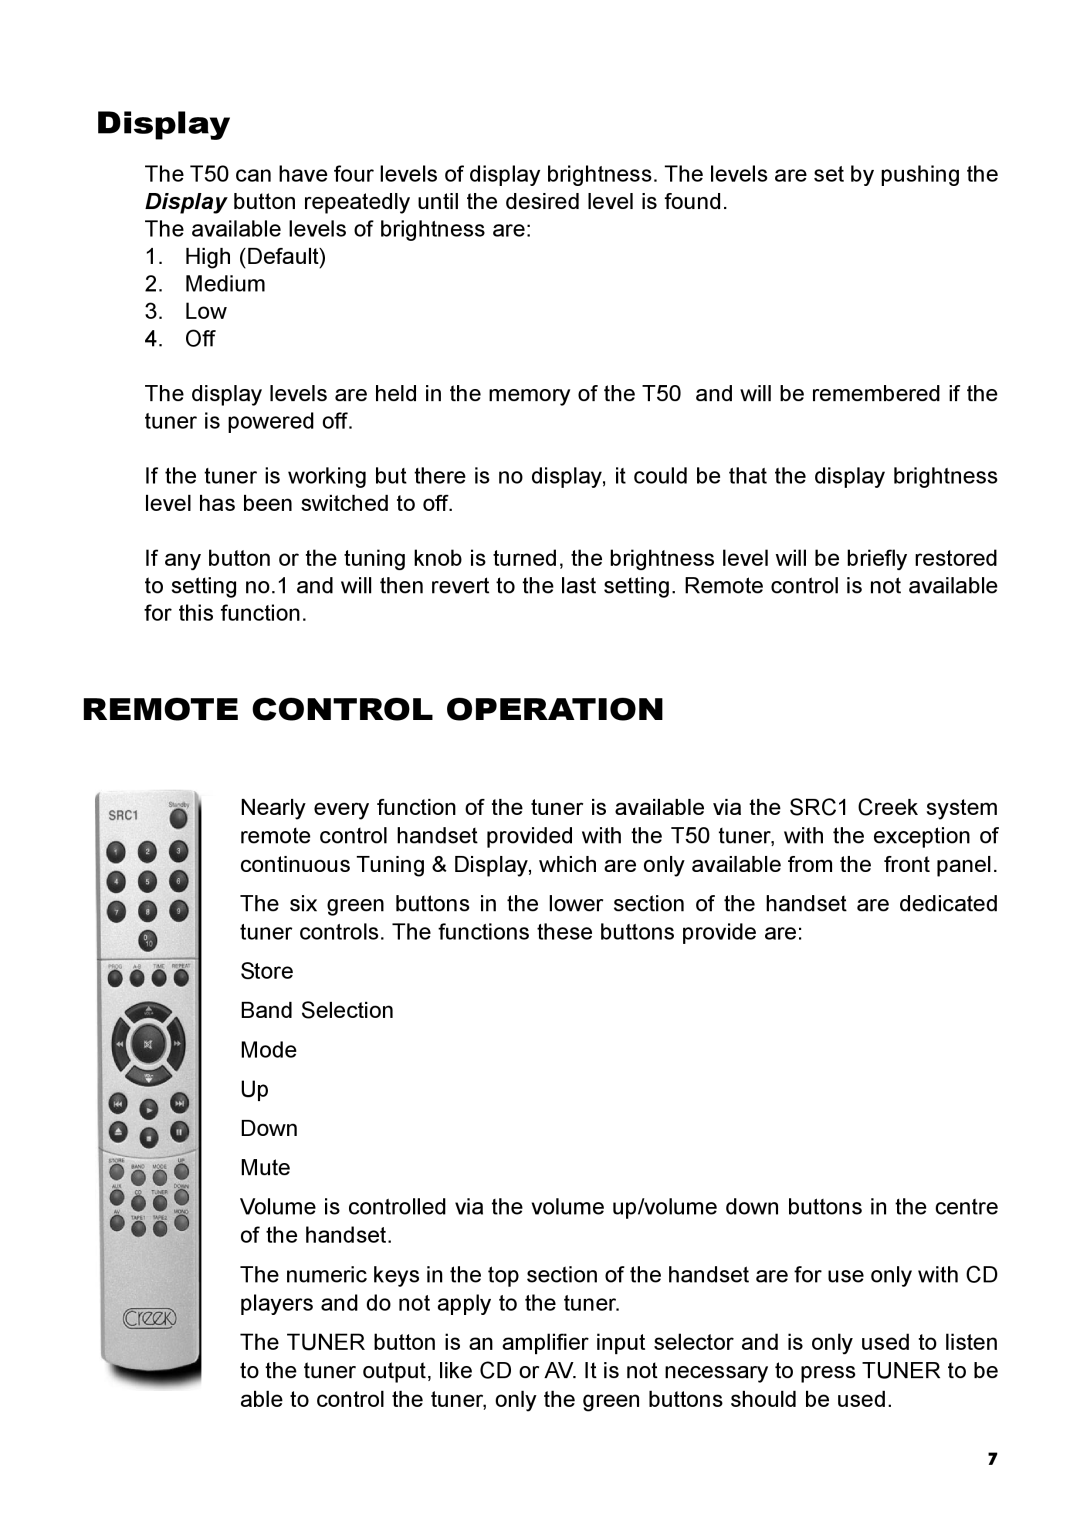 Creek Audio T50 manual Display, Remote Control Operation 